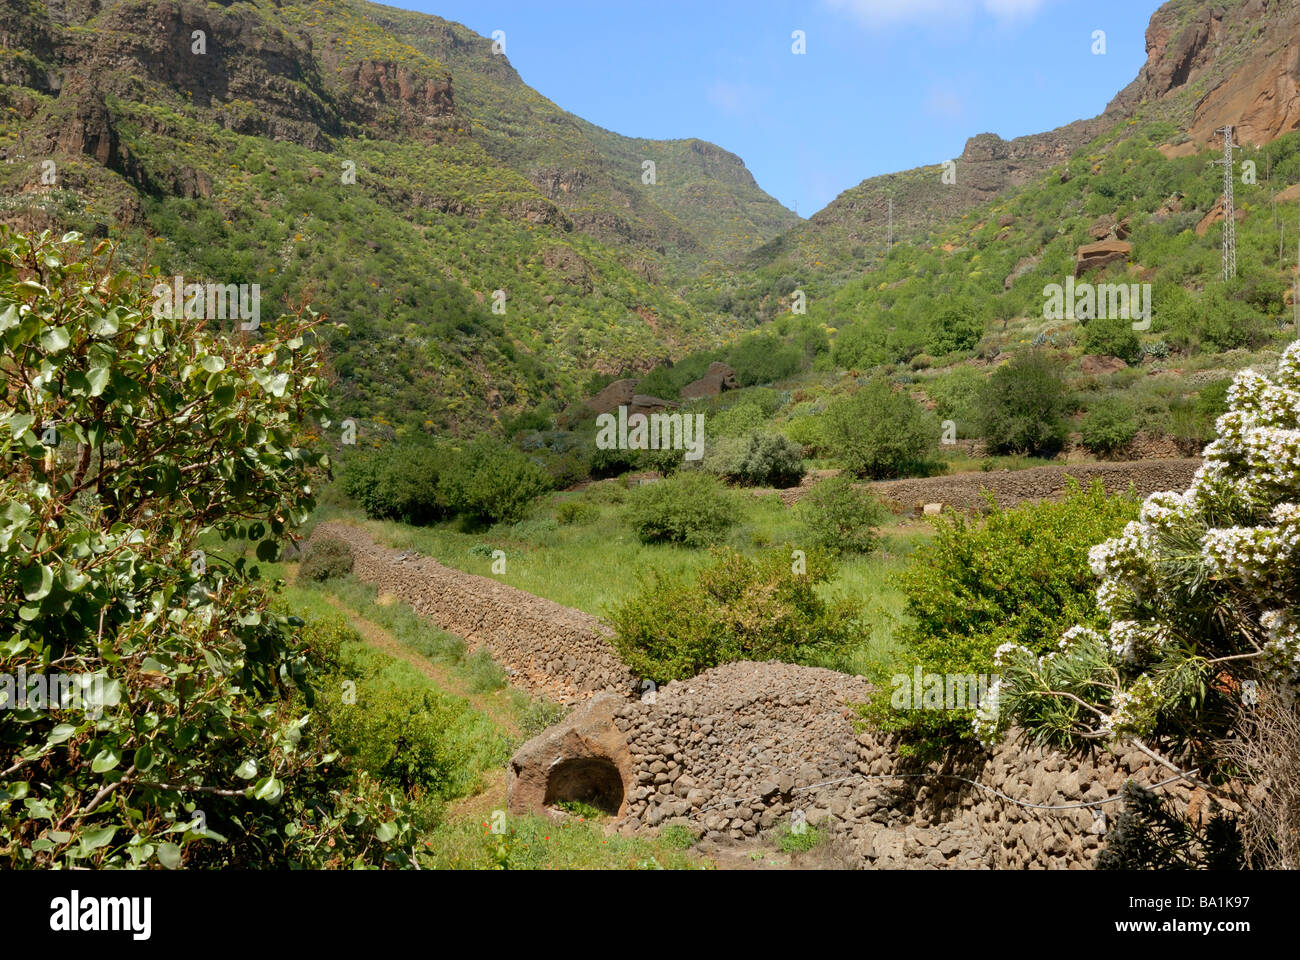 A fine view to the Barranco de Guayadeque, Guayadeque Ravine, Gran Canaria, Canary Islands, Spain, Europe. Stock Photo